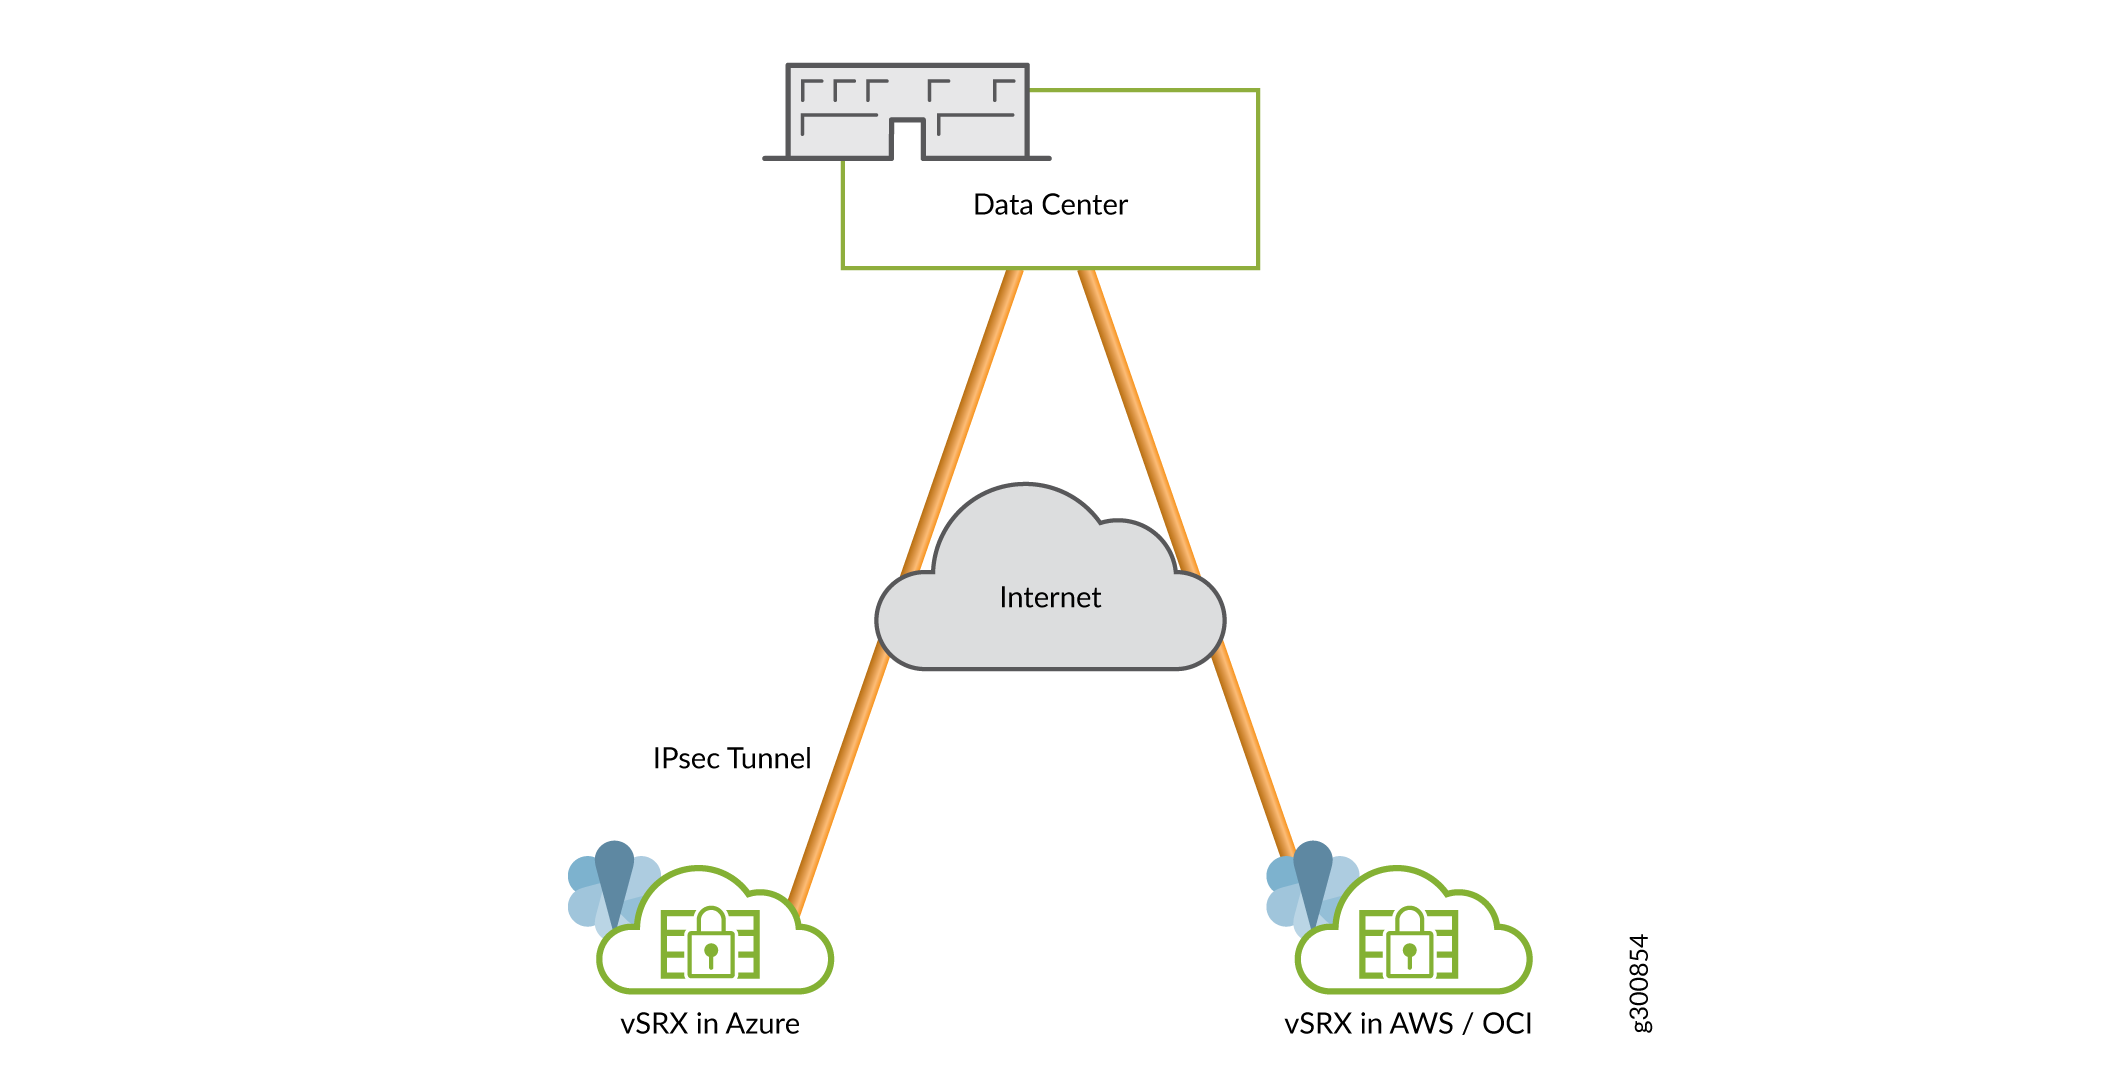 Deployment Scenario of vSRX Virtual Firewall using an IPsec Connection